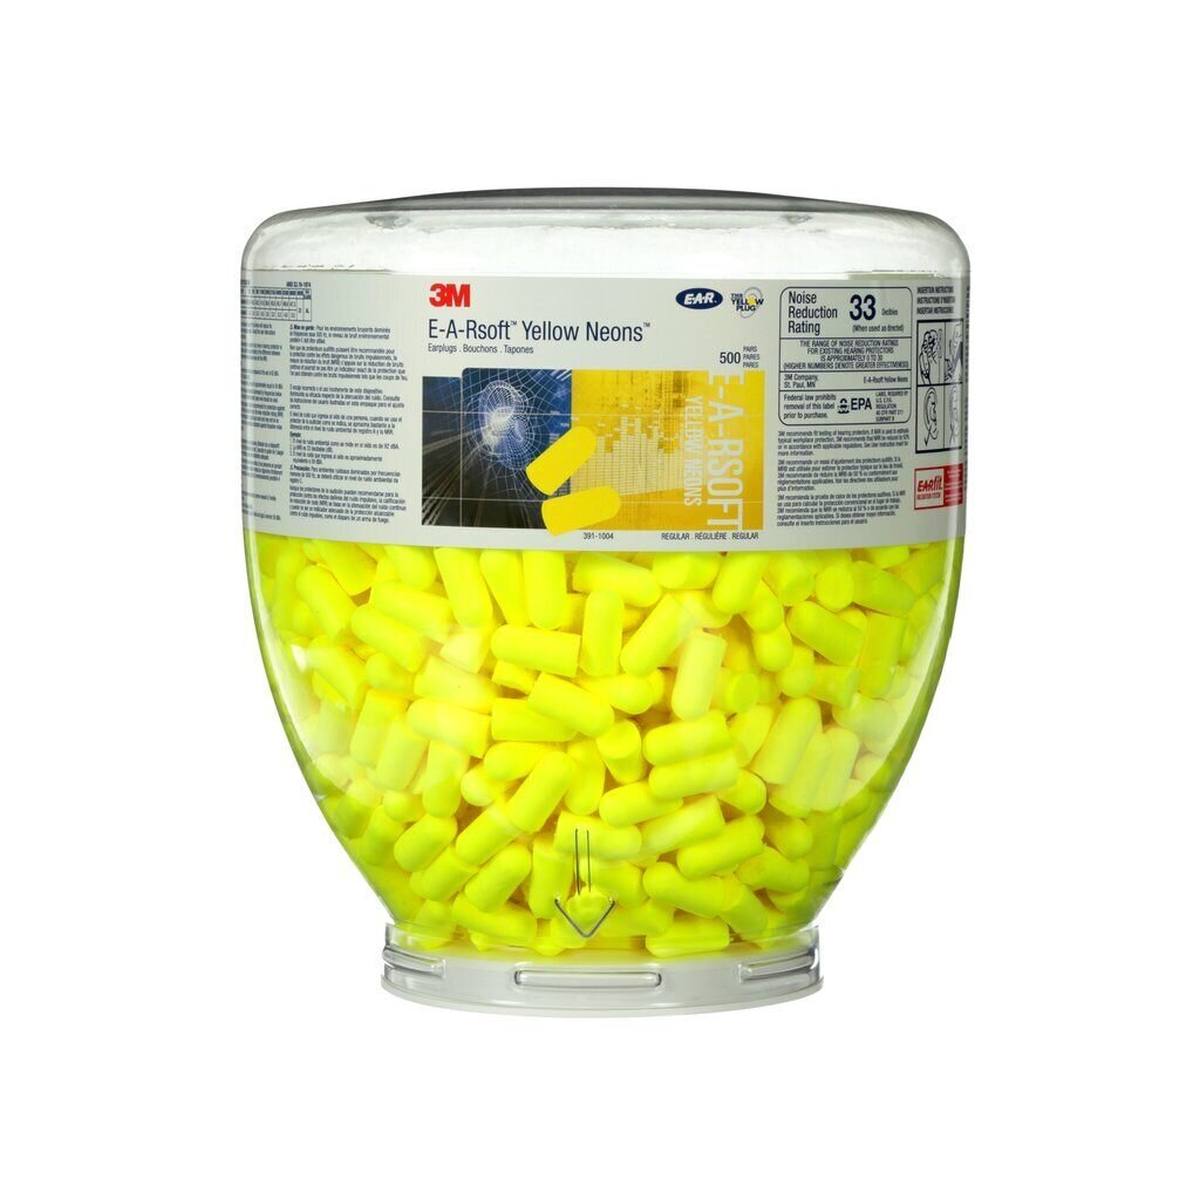 3M E-A-R Soft Yellow Neons Dispenser-Aufsatz für OneTouch Pro Spender, SNR = 36 dB, 500 Paar, neongelb PD01002